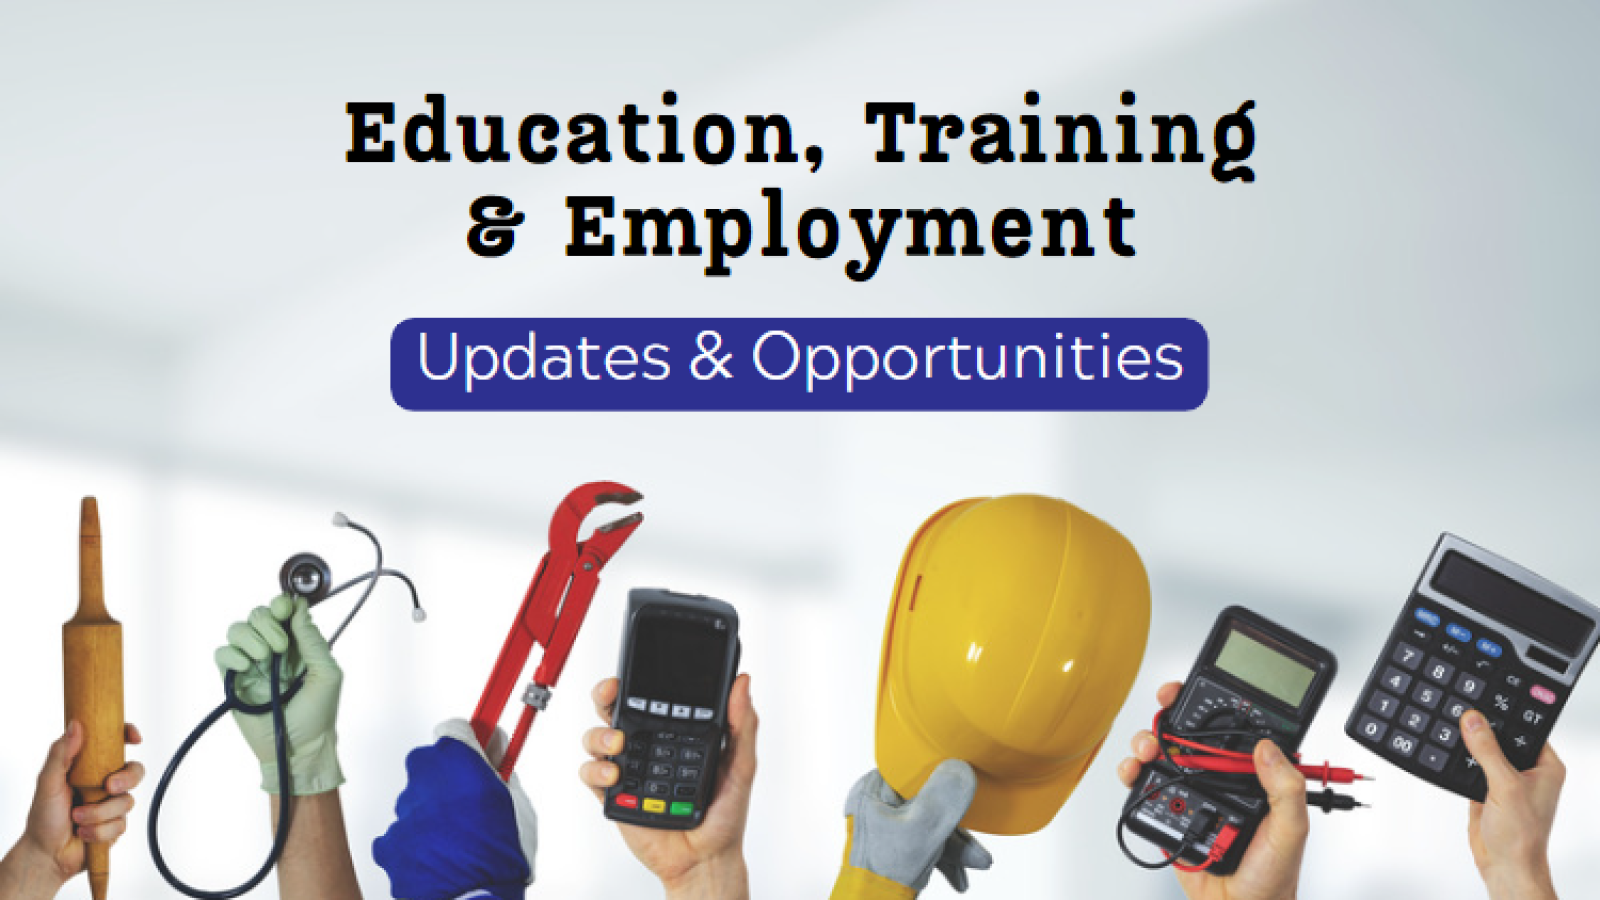 Education, Training & Employment